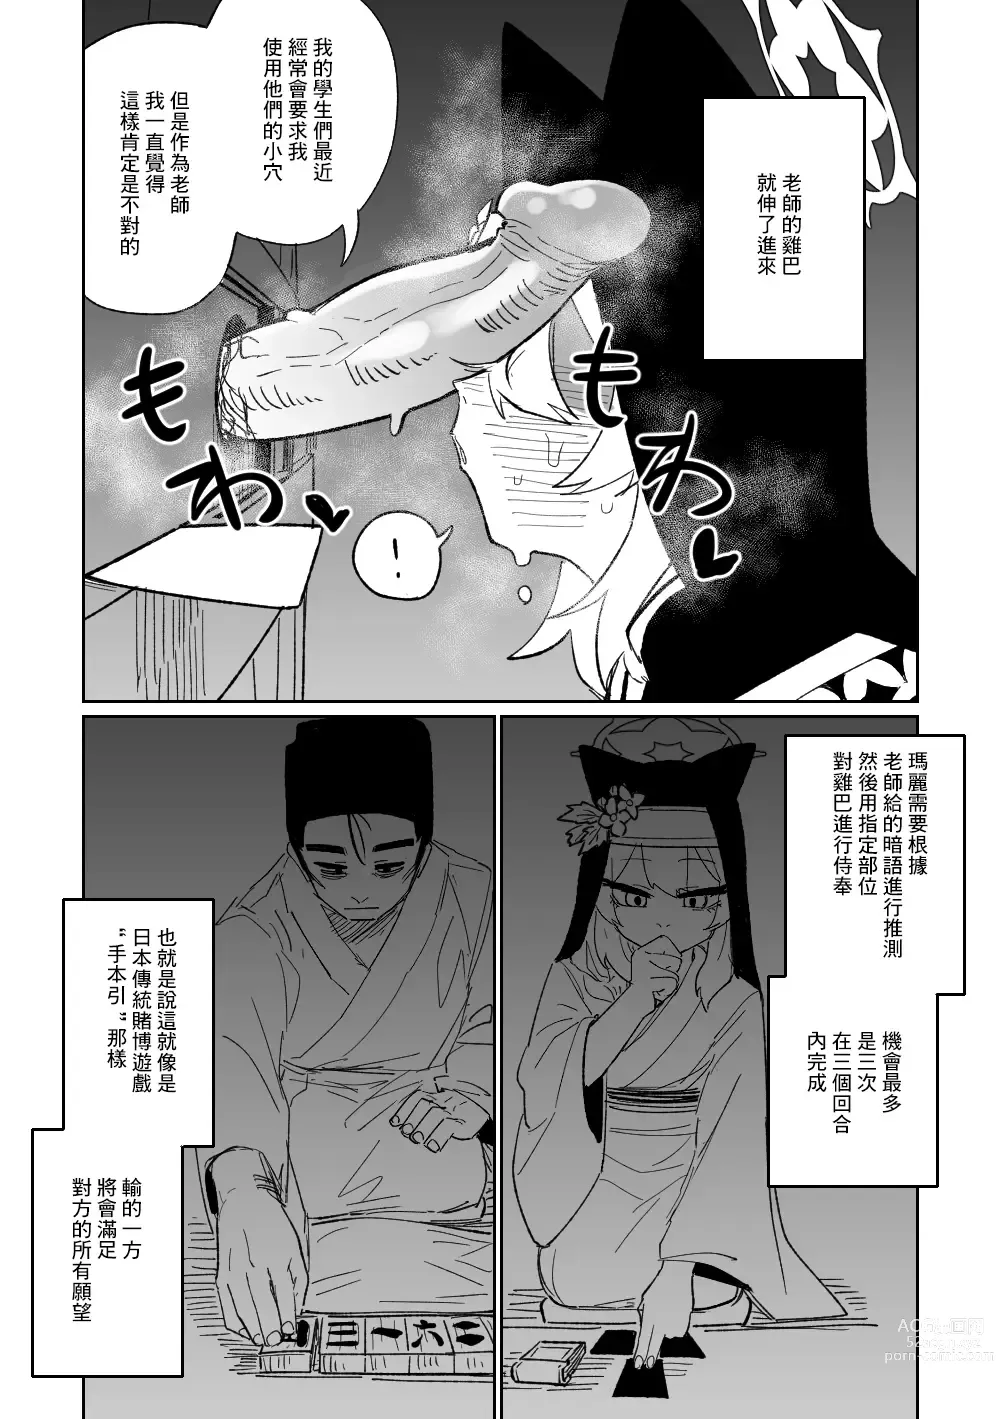 Page 3 of doujinshi Zange Game & Kakekin no Shiharai